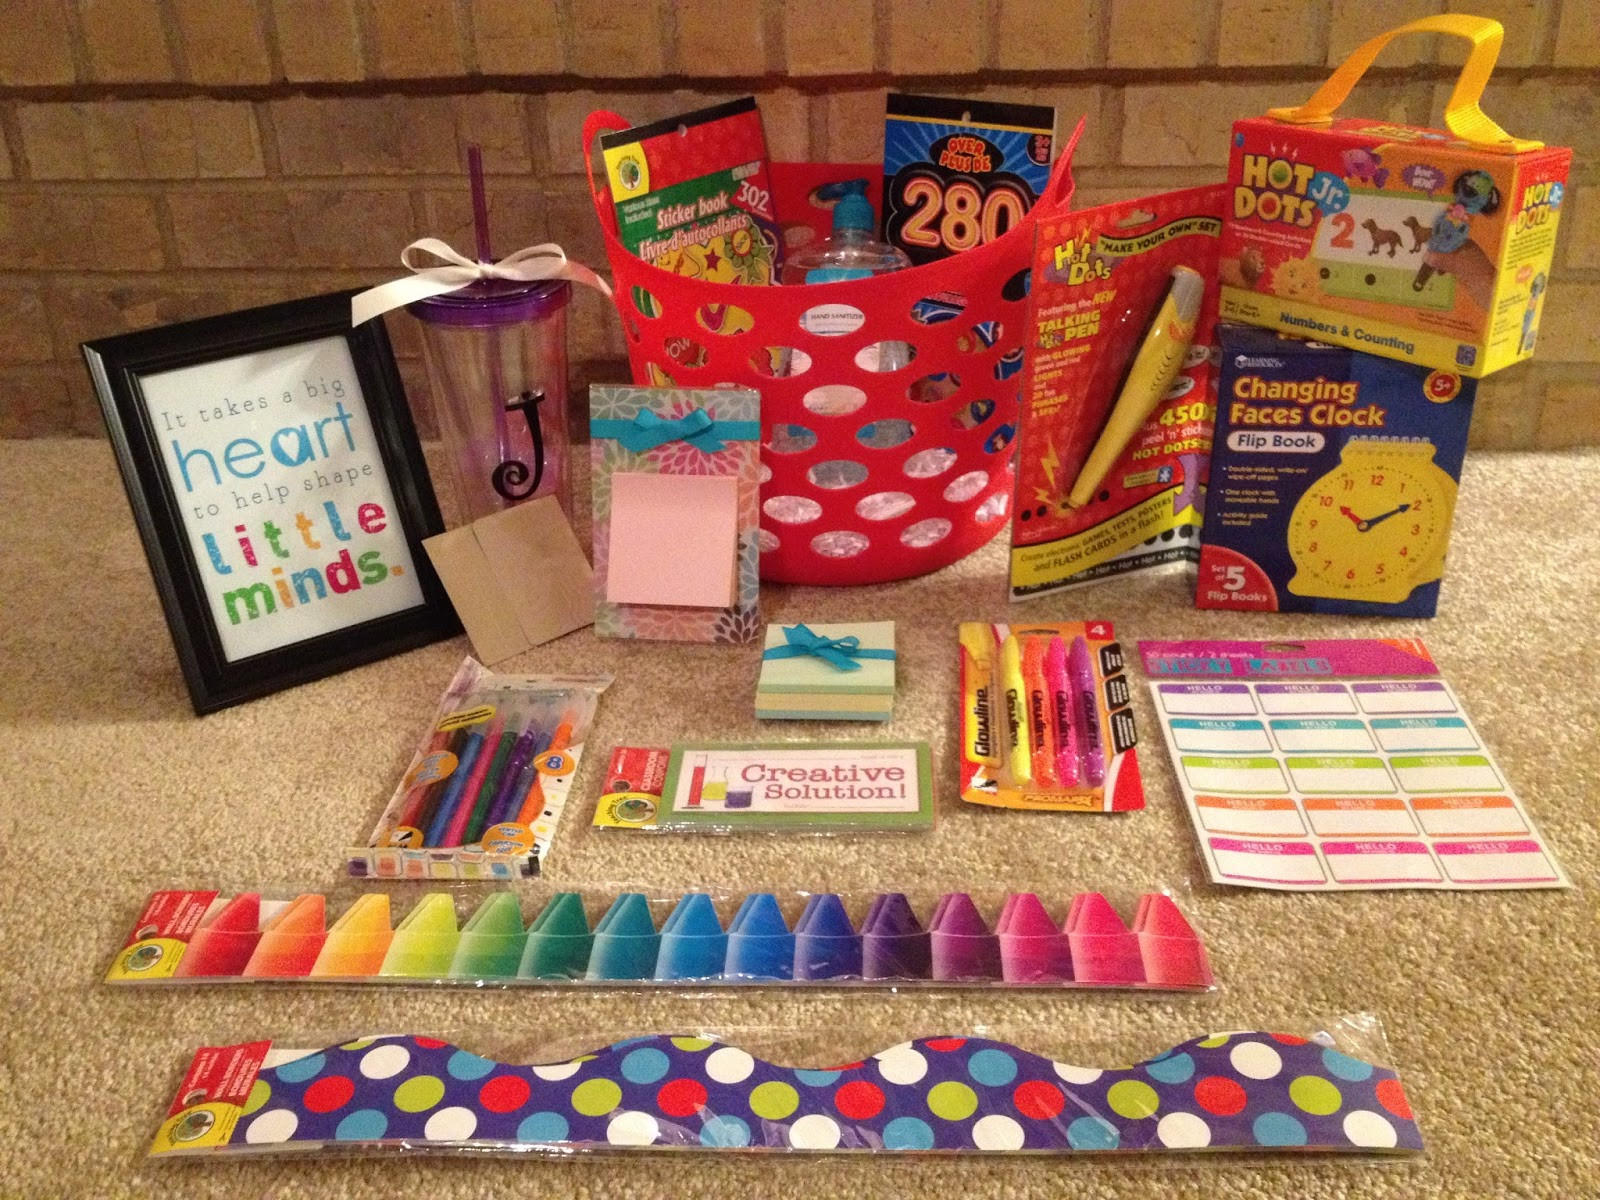 New Teacher Gift Basket Ideas
 Sugar & Spice DIY Teacher Gift Basket